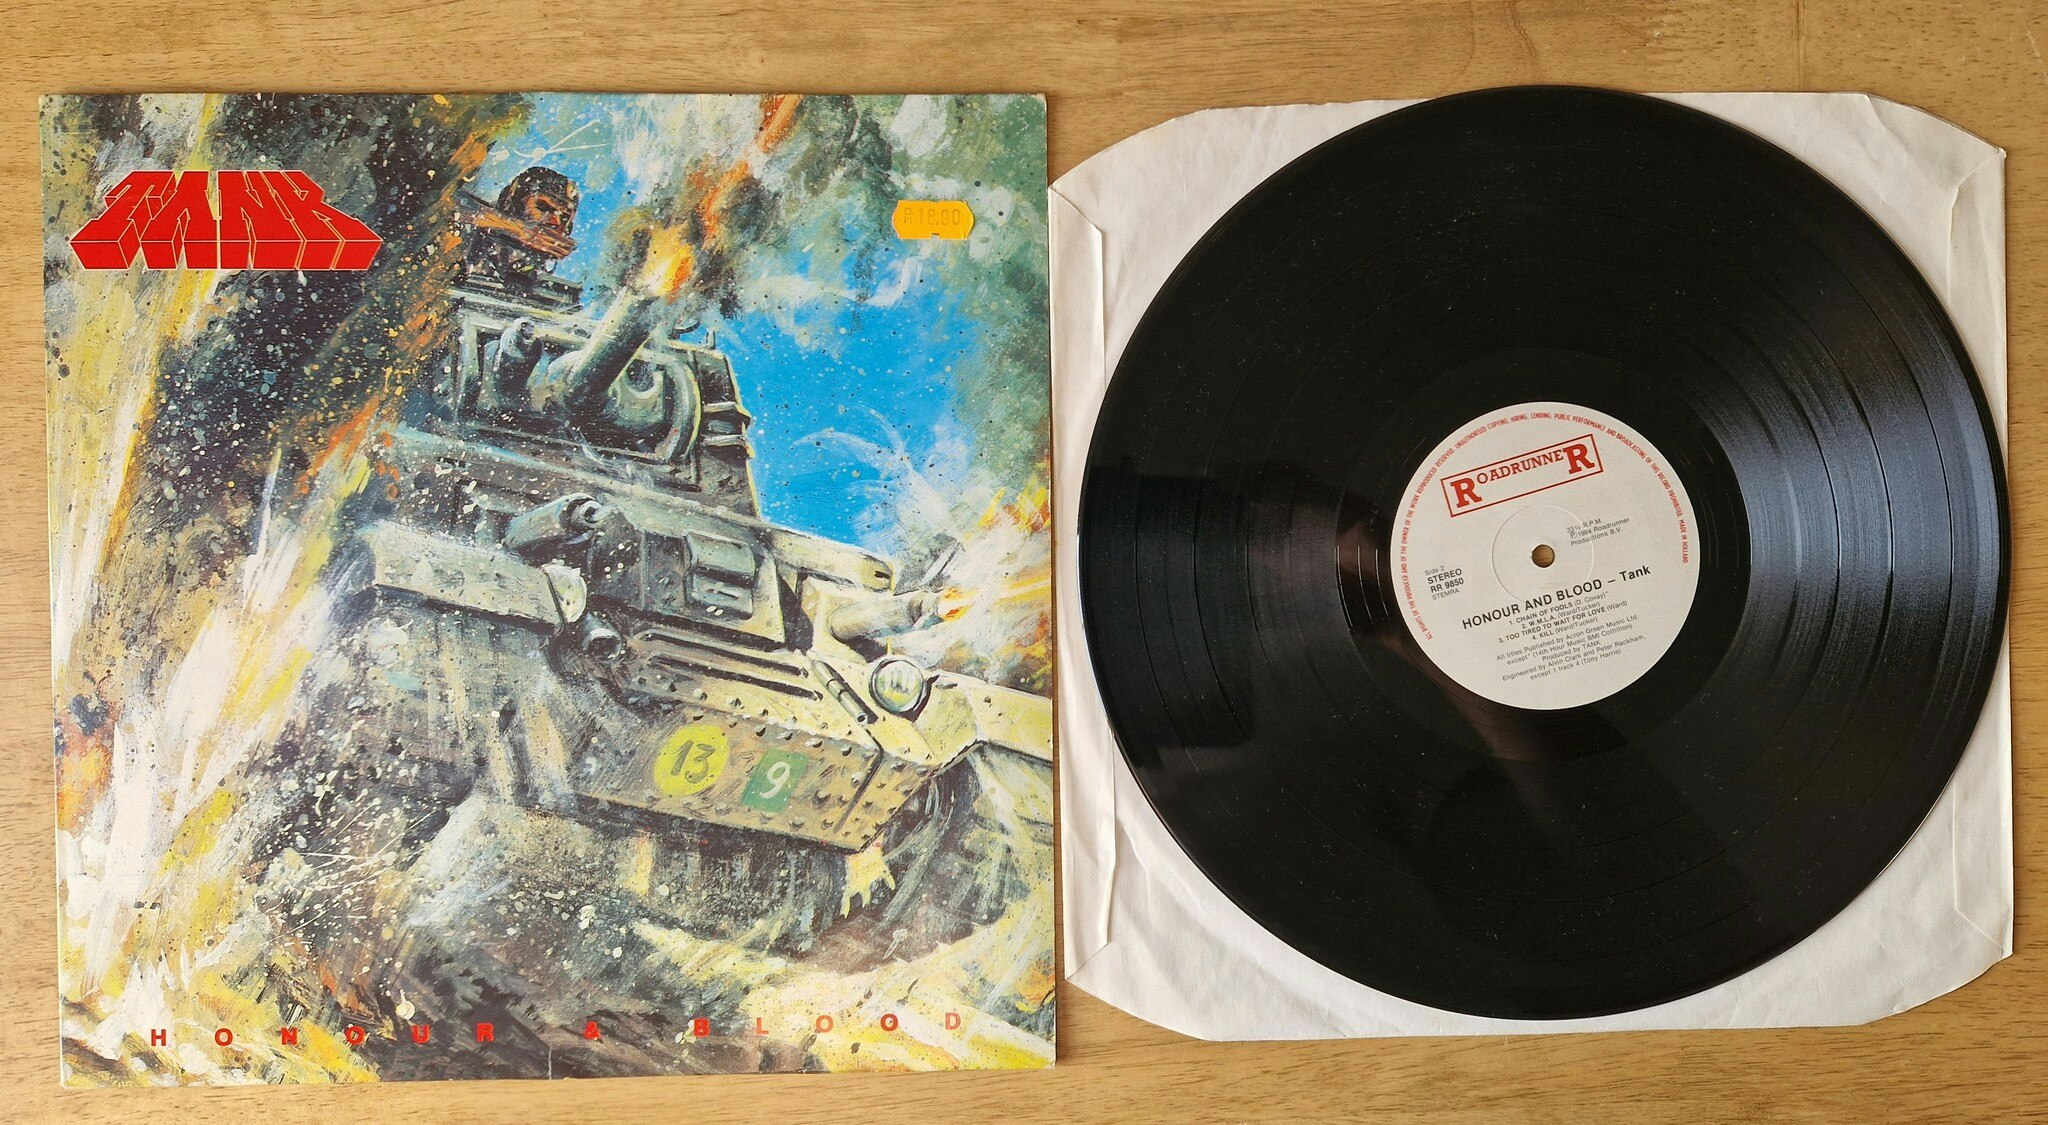 Tank, Honour and blood. Vinyl LP